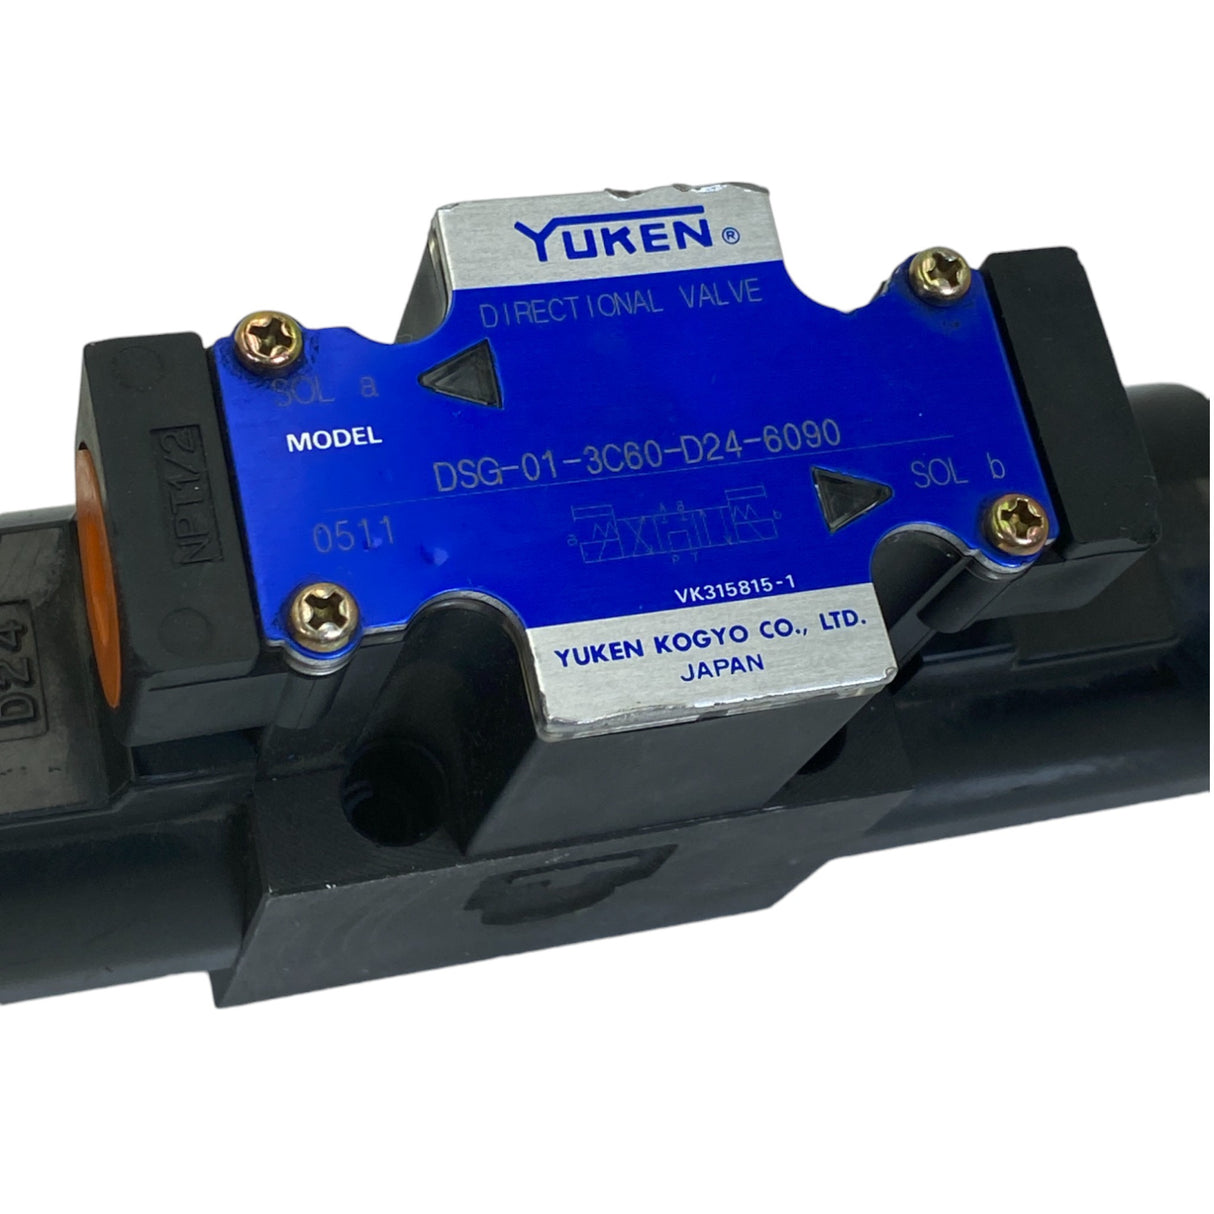 DSG-01-3C60-D24-7090 Yuken Hydraulics Solenoid Directional Valve